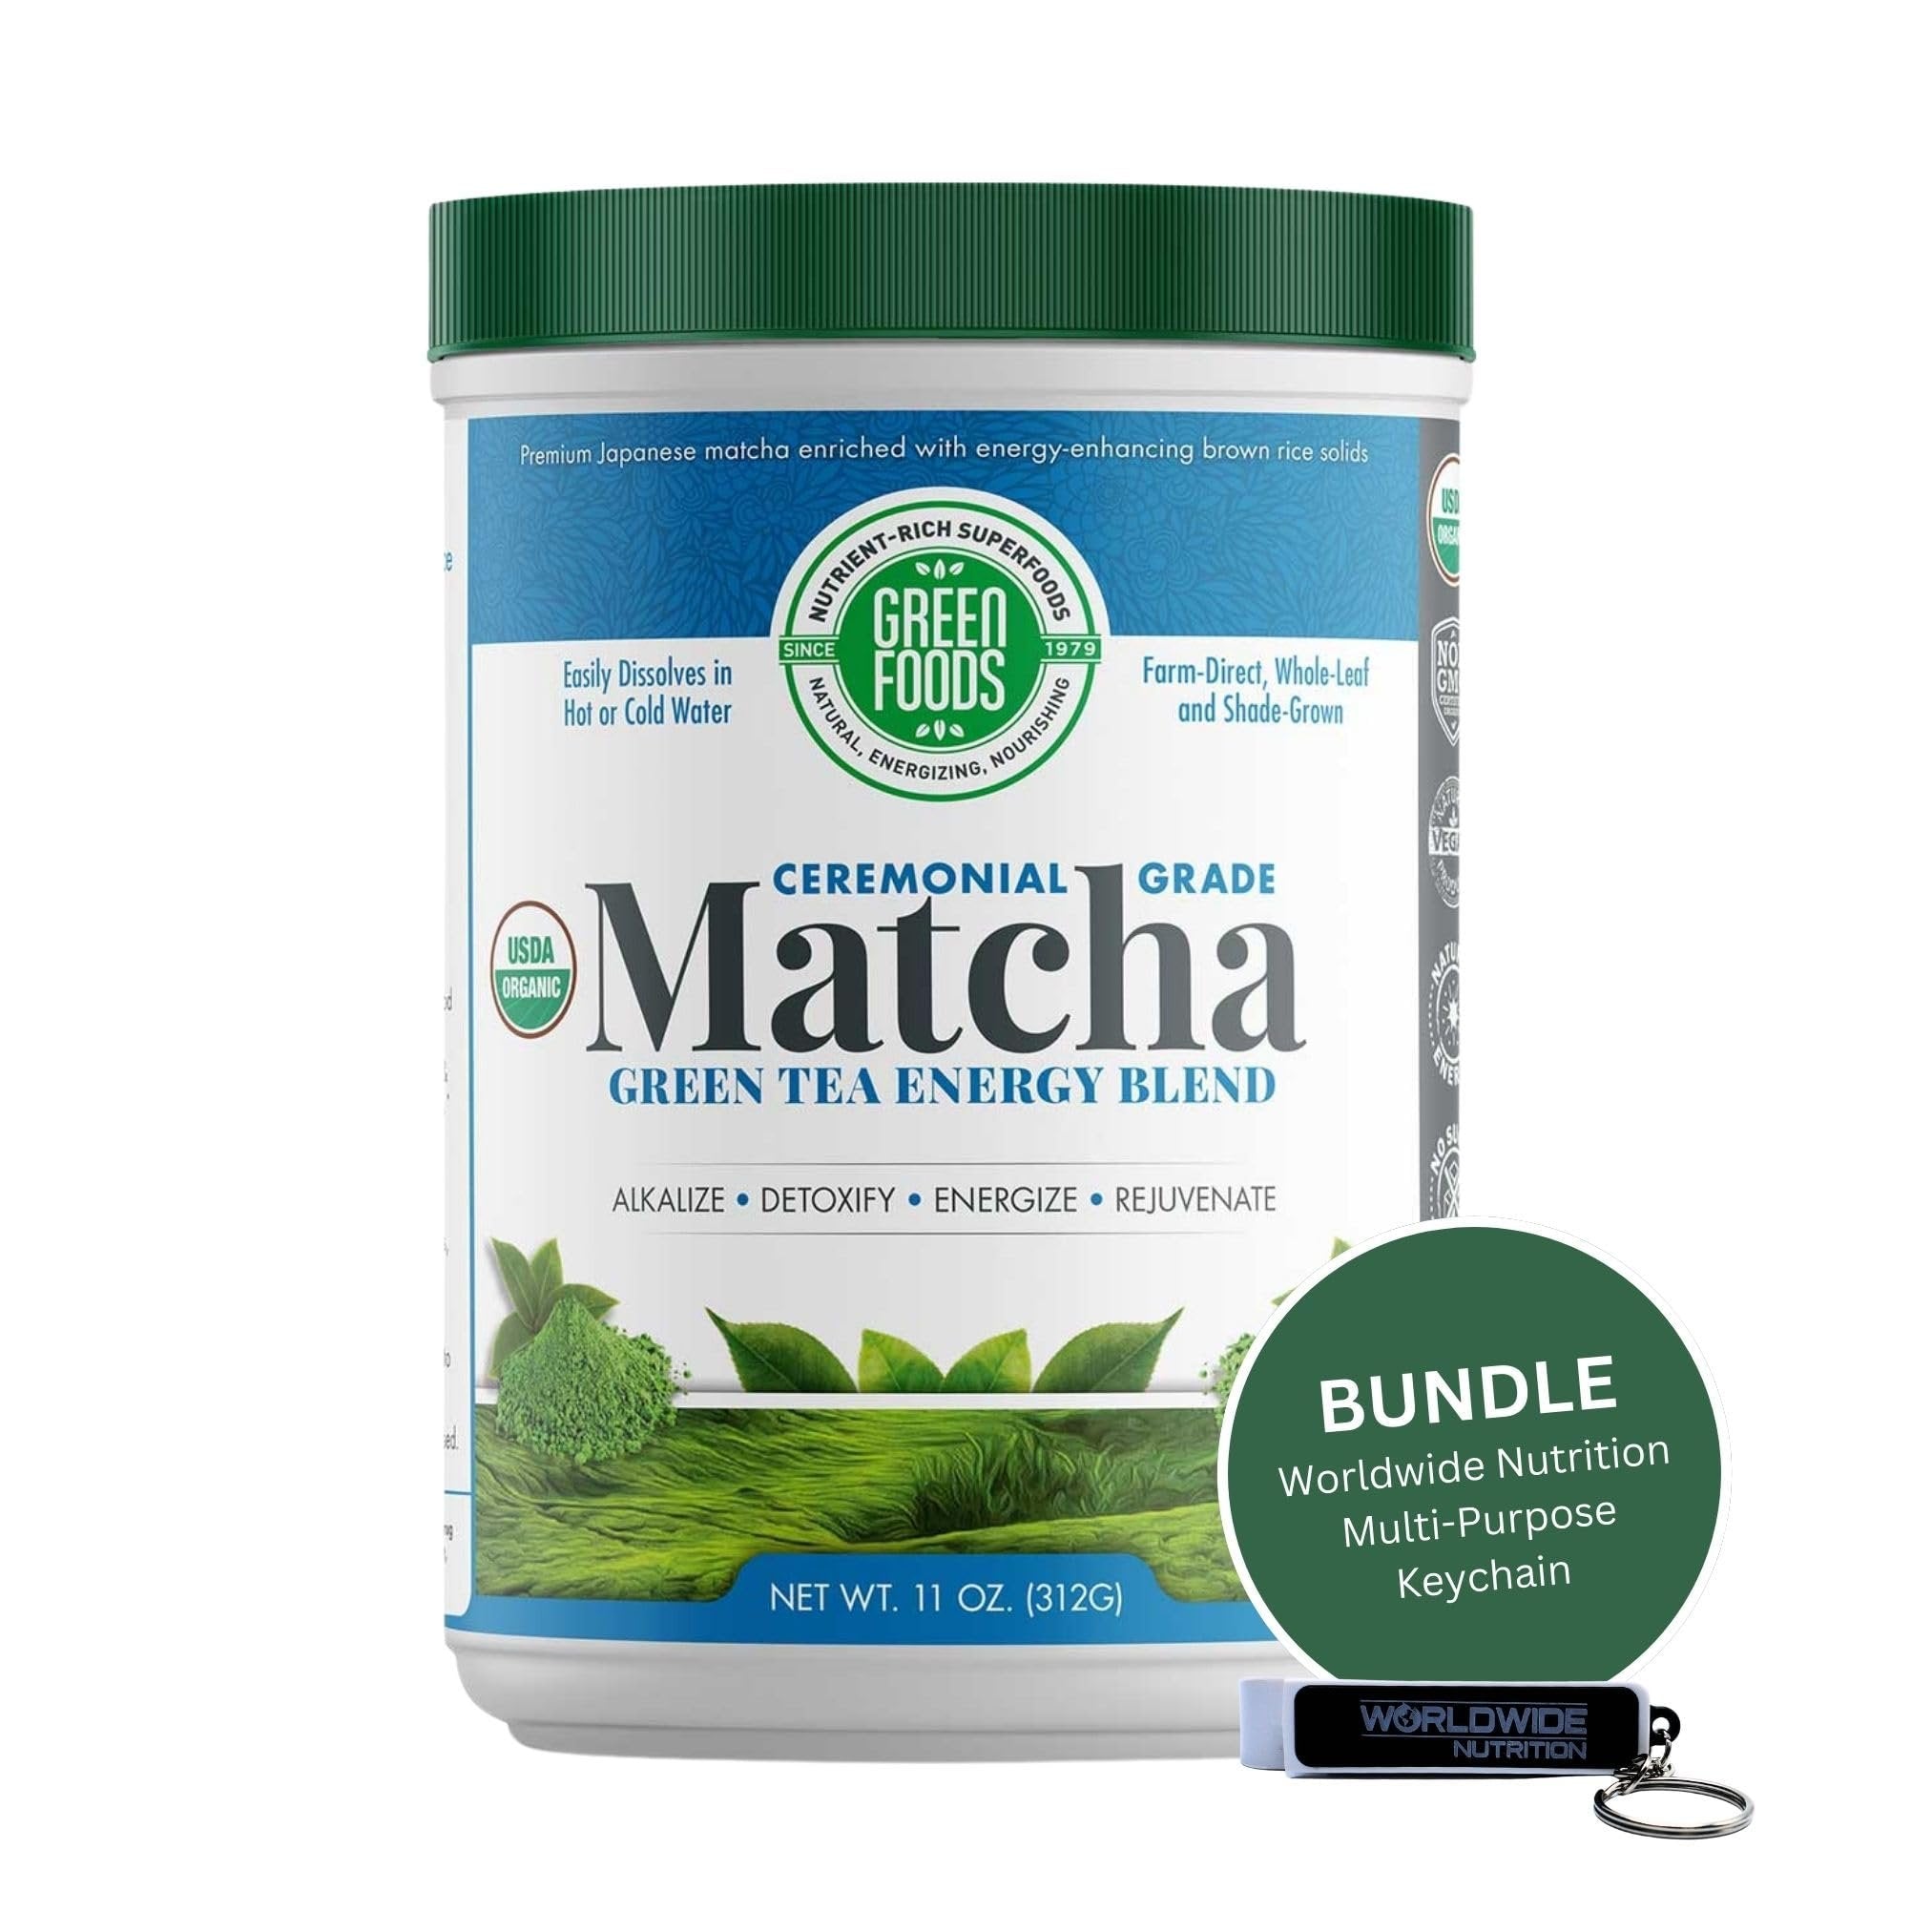 Green Foods Ceremonial Grade Organic Matcha Green Tea Energy Blend Powder, 11 oz - Gluten-Free - Pack of 1 with Keychain